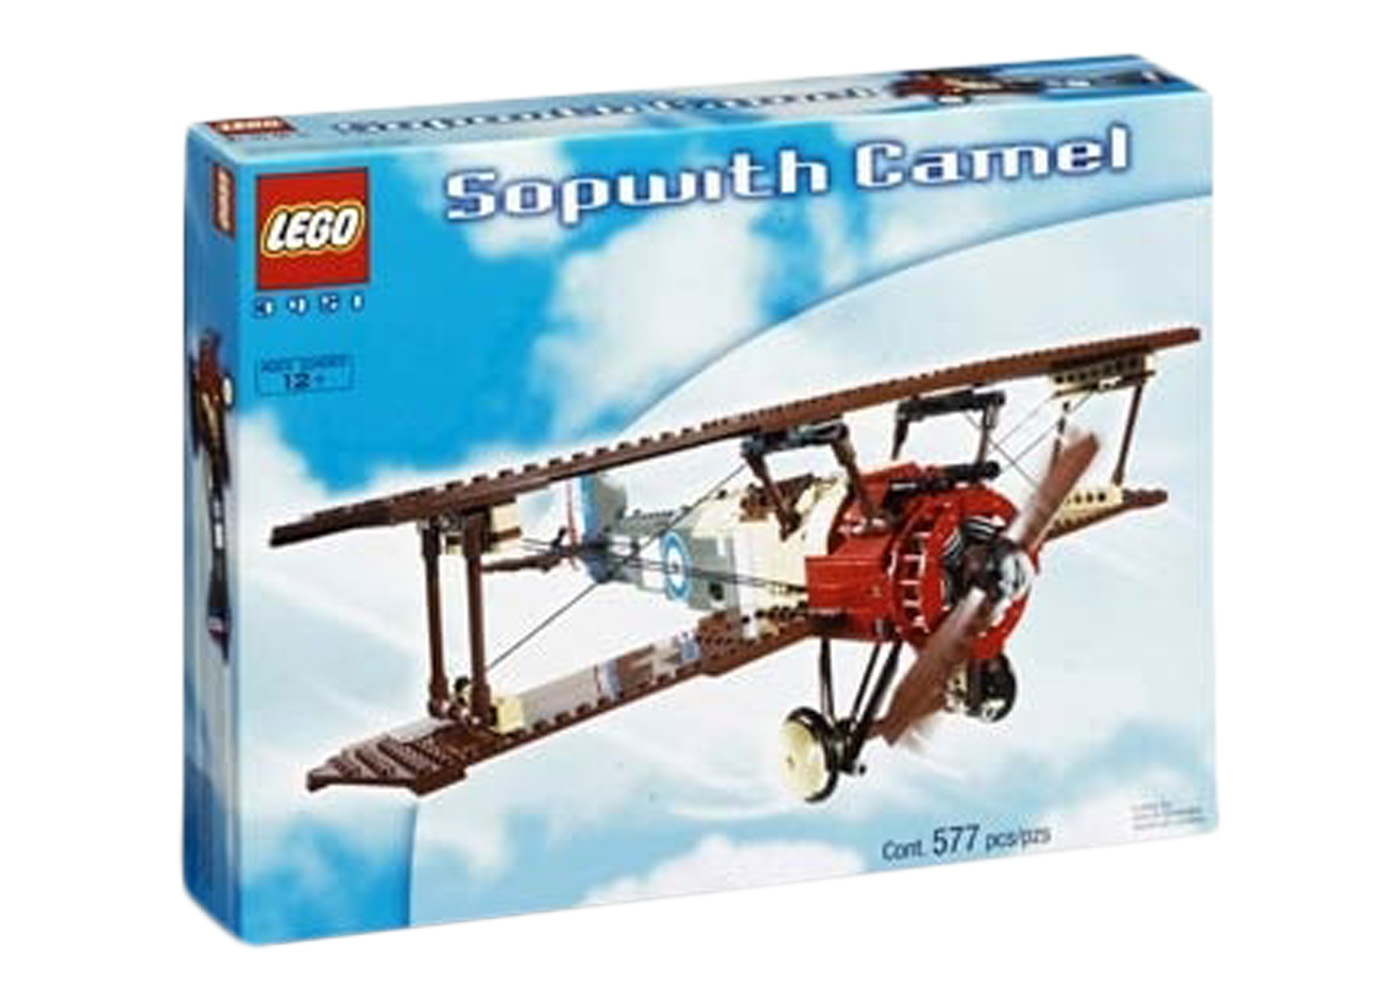 LEGO Creator Expert Sopwith Camel Set 3451 - US